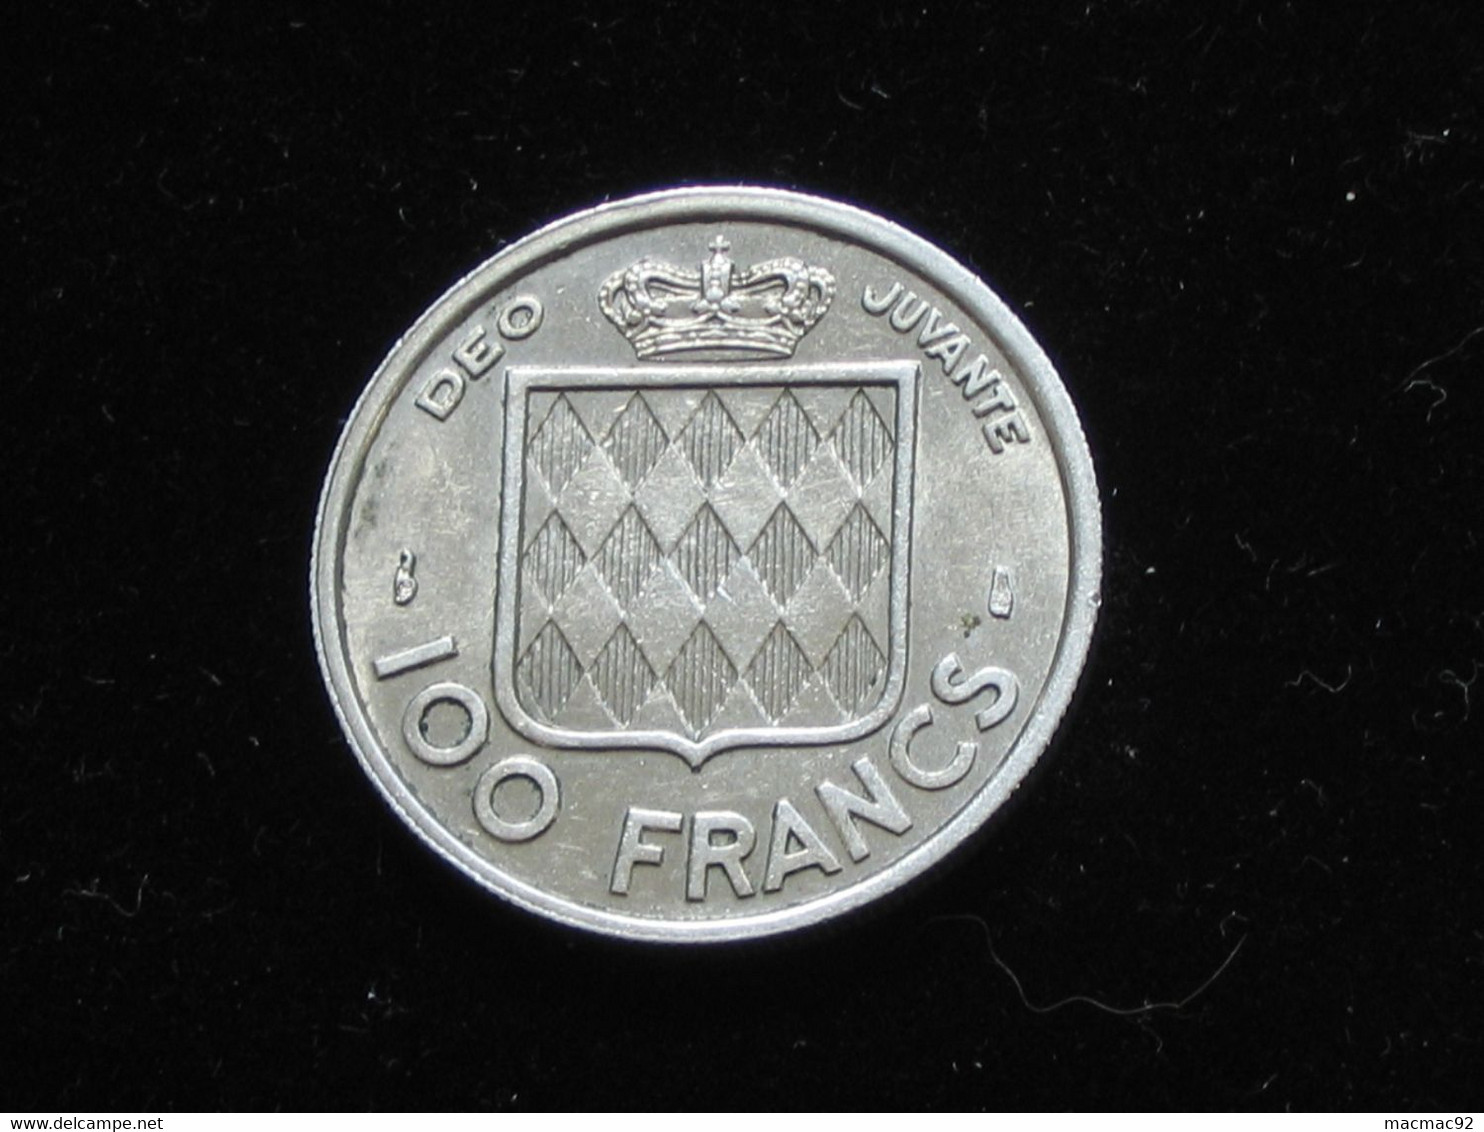 MONACO - 100 Frs 1956 - Rainier III Prince De Monaco **** EN ACHAT IMMEDIAT **** - 1949-1956 Old Francs